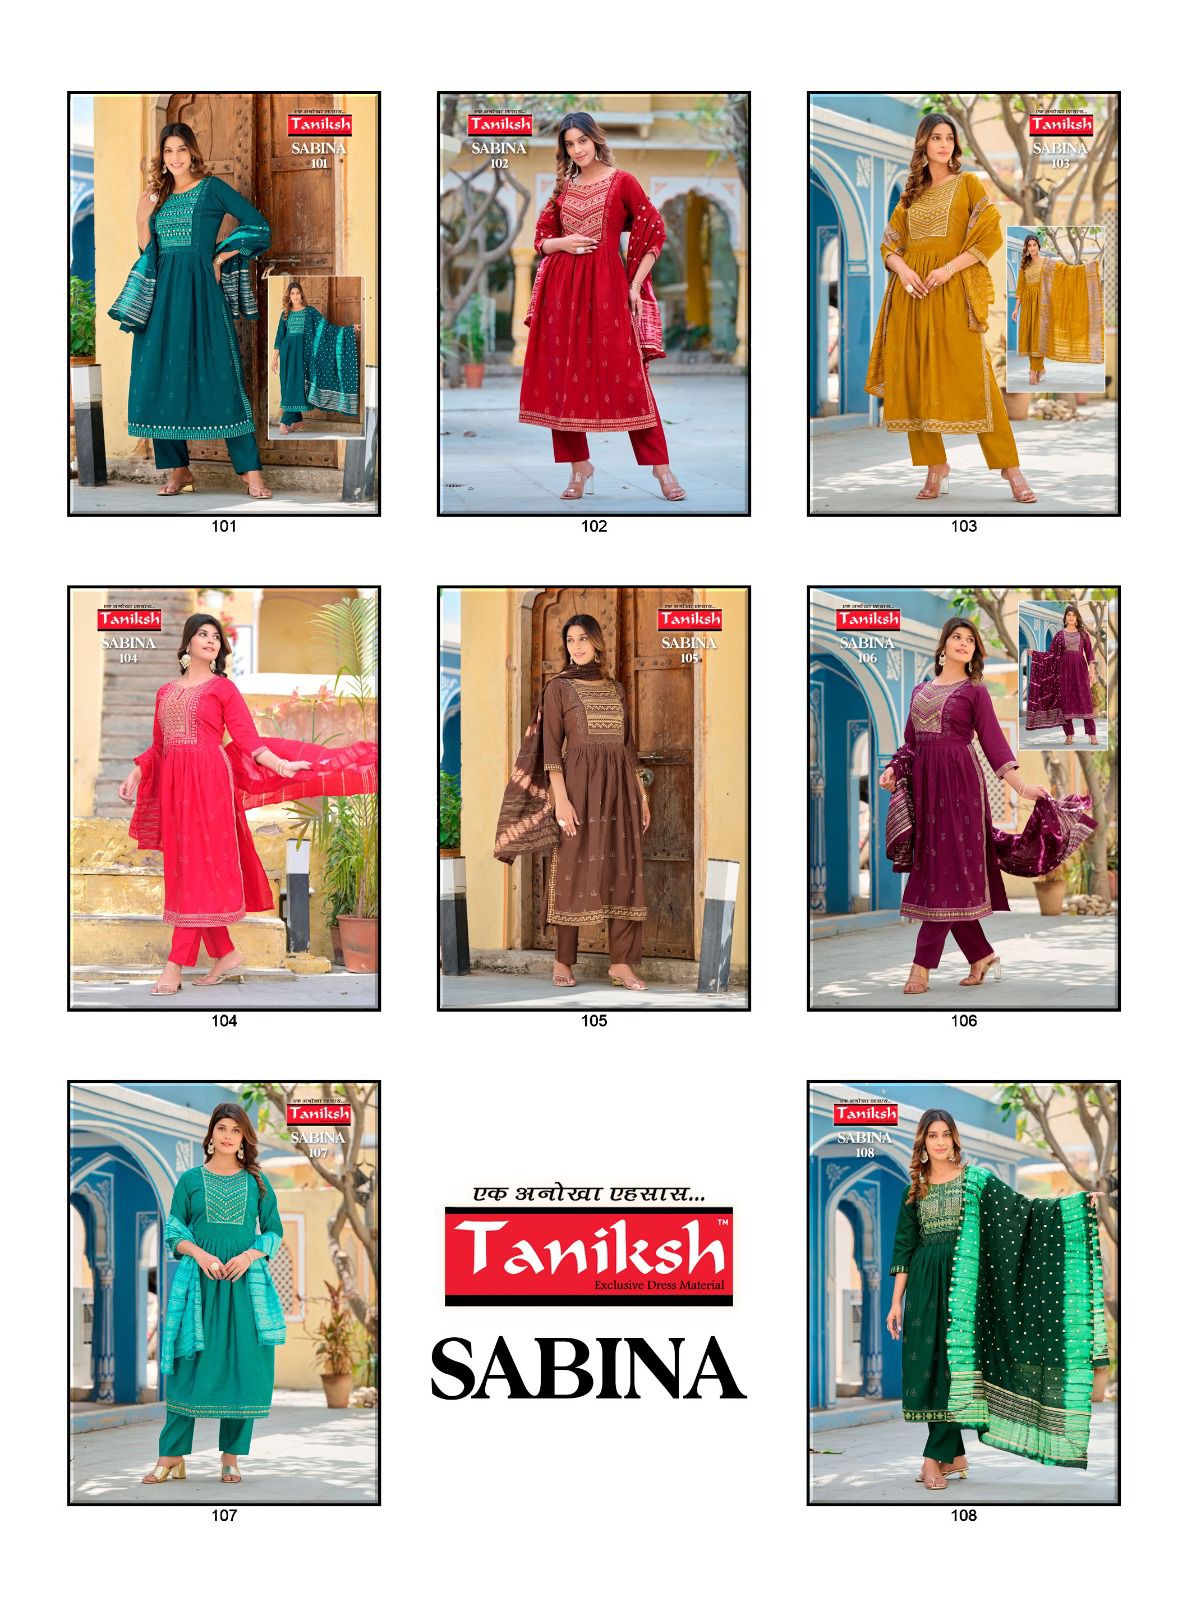 Taniksh Sabina collection 3